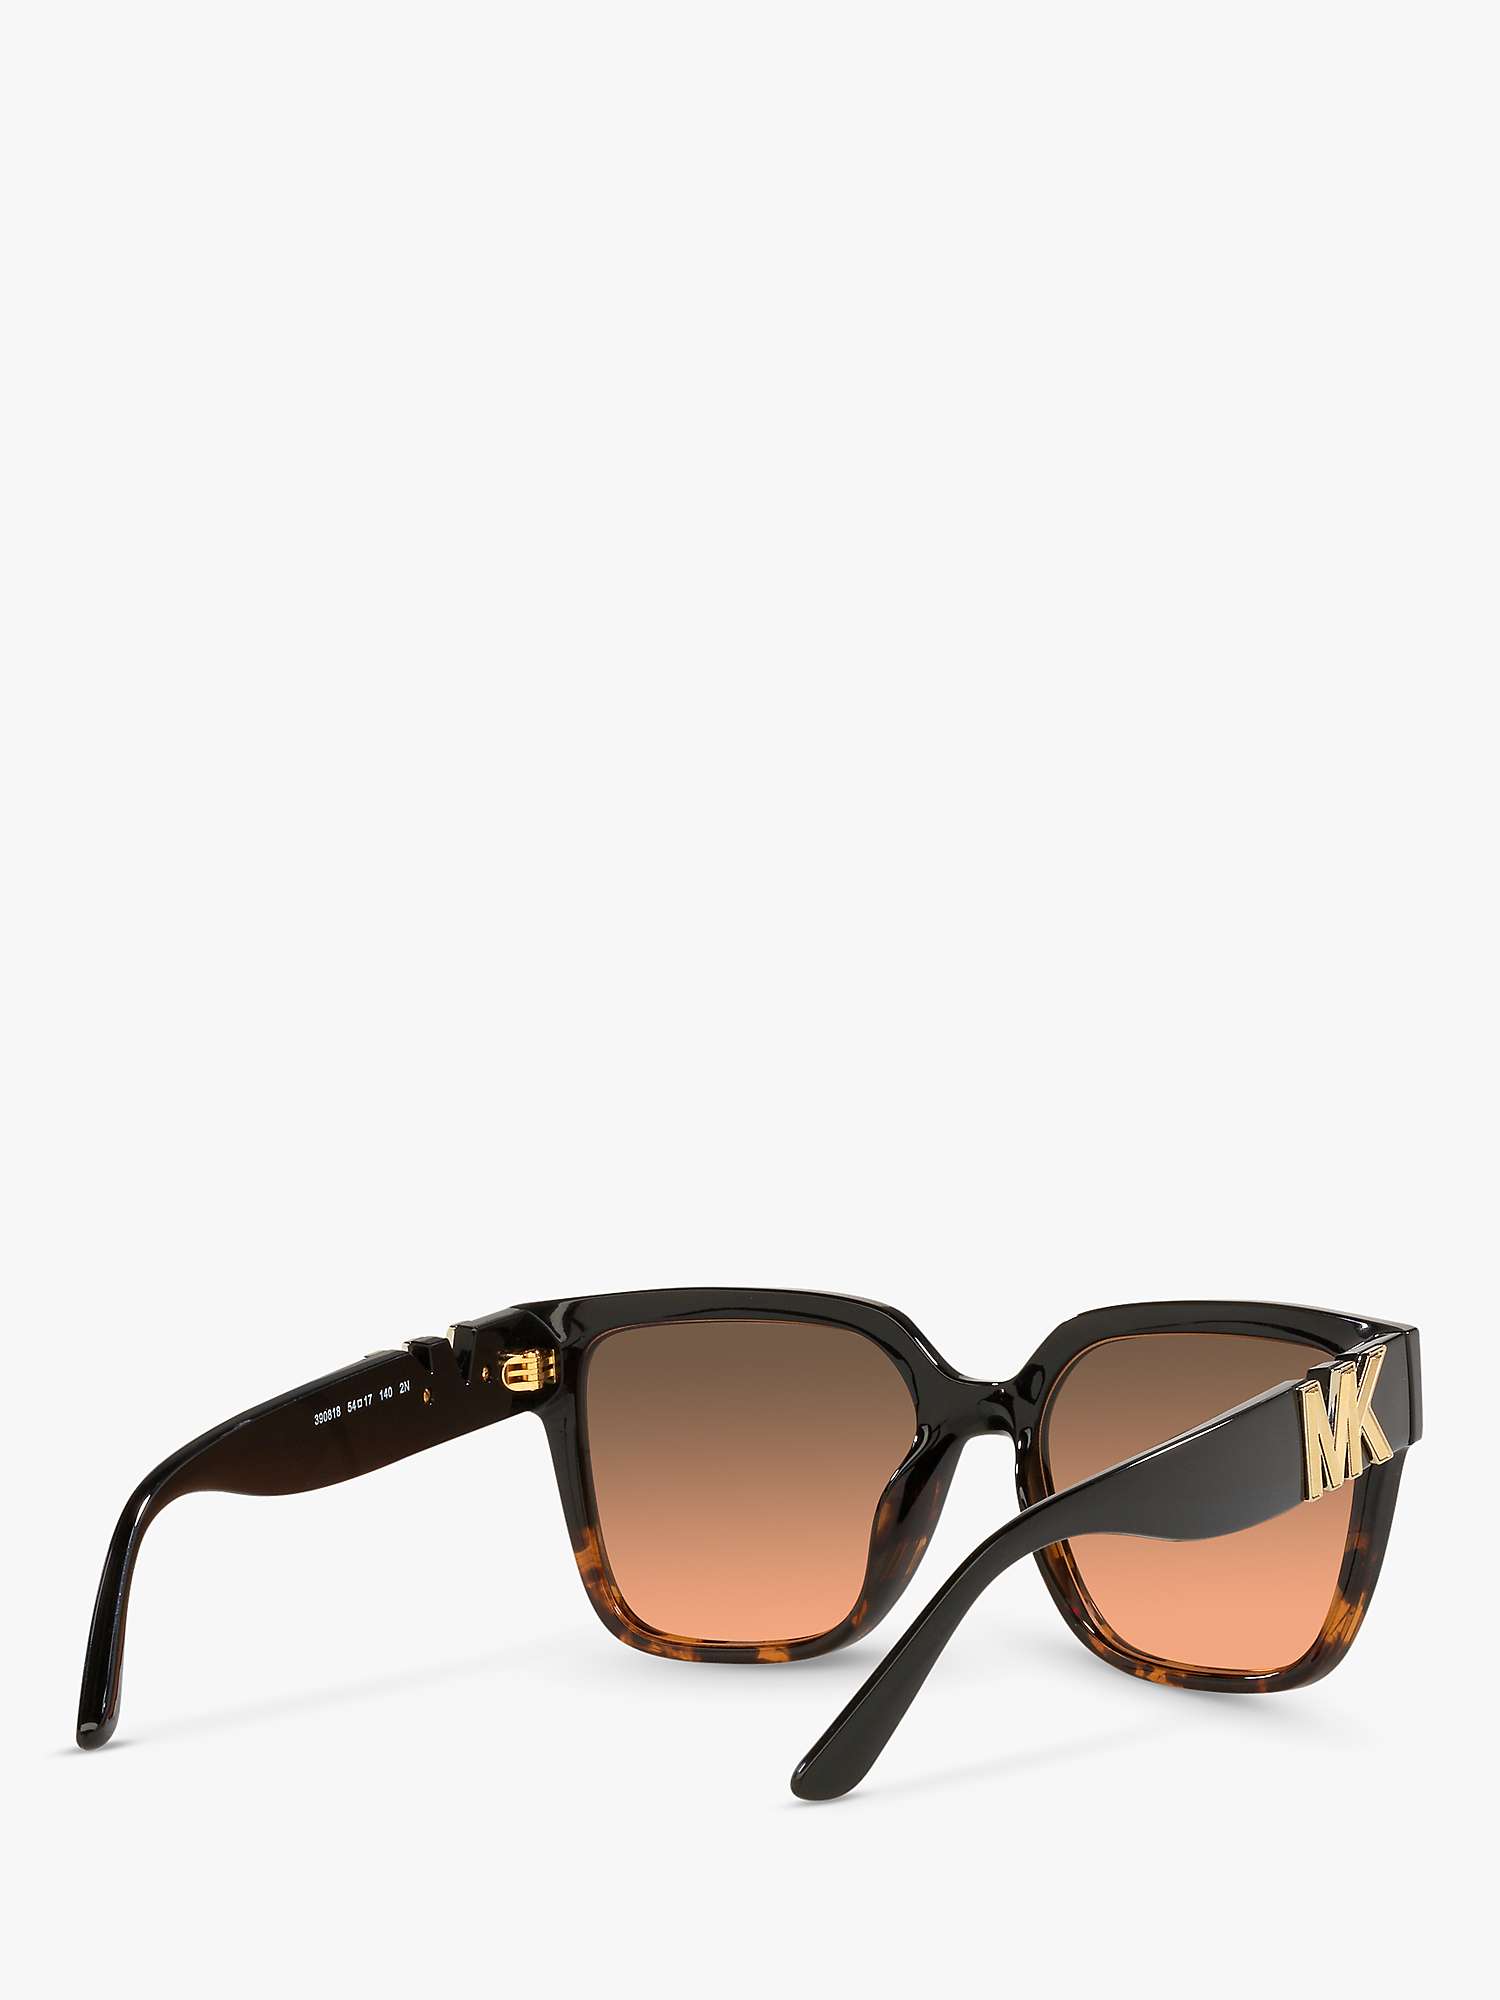 Buy Michael Kors MK2170U Women's Karlie Square Sunglasses Online at johnlewis.com